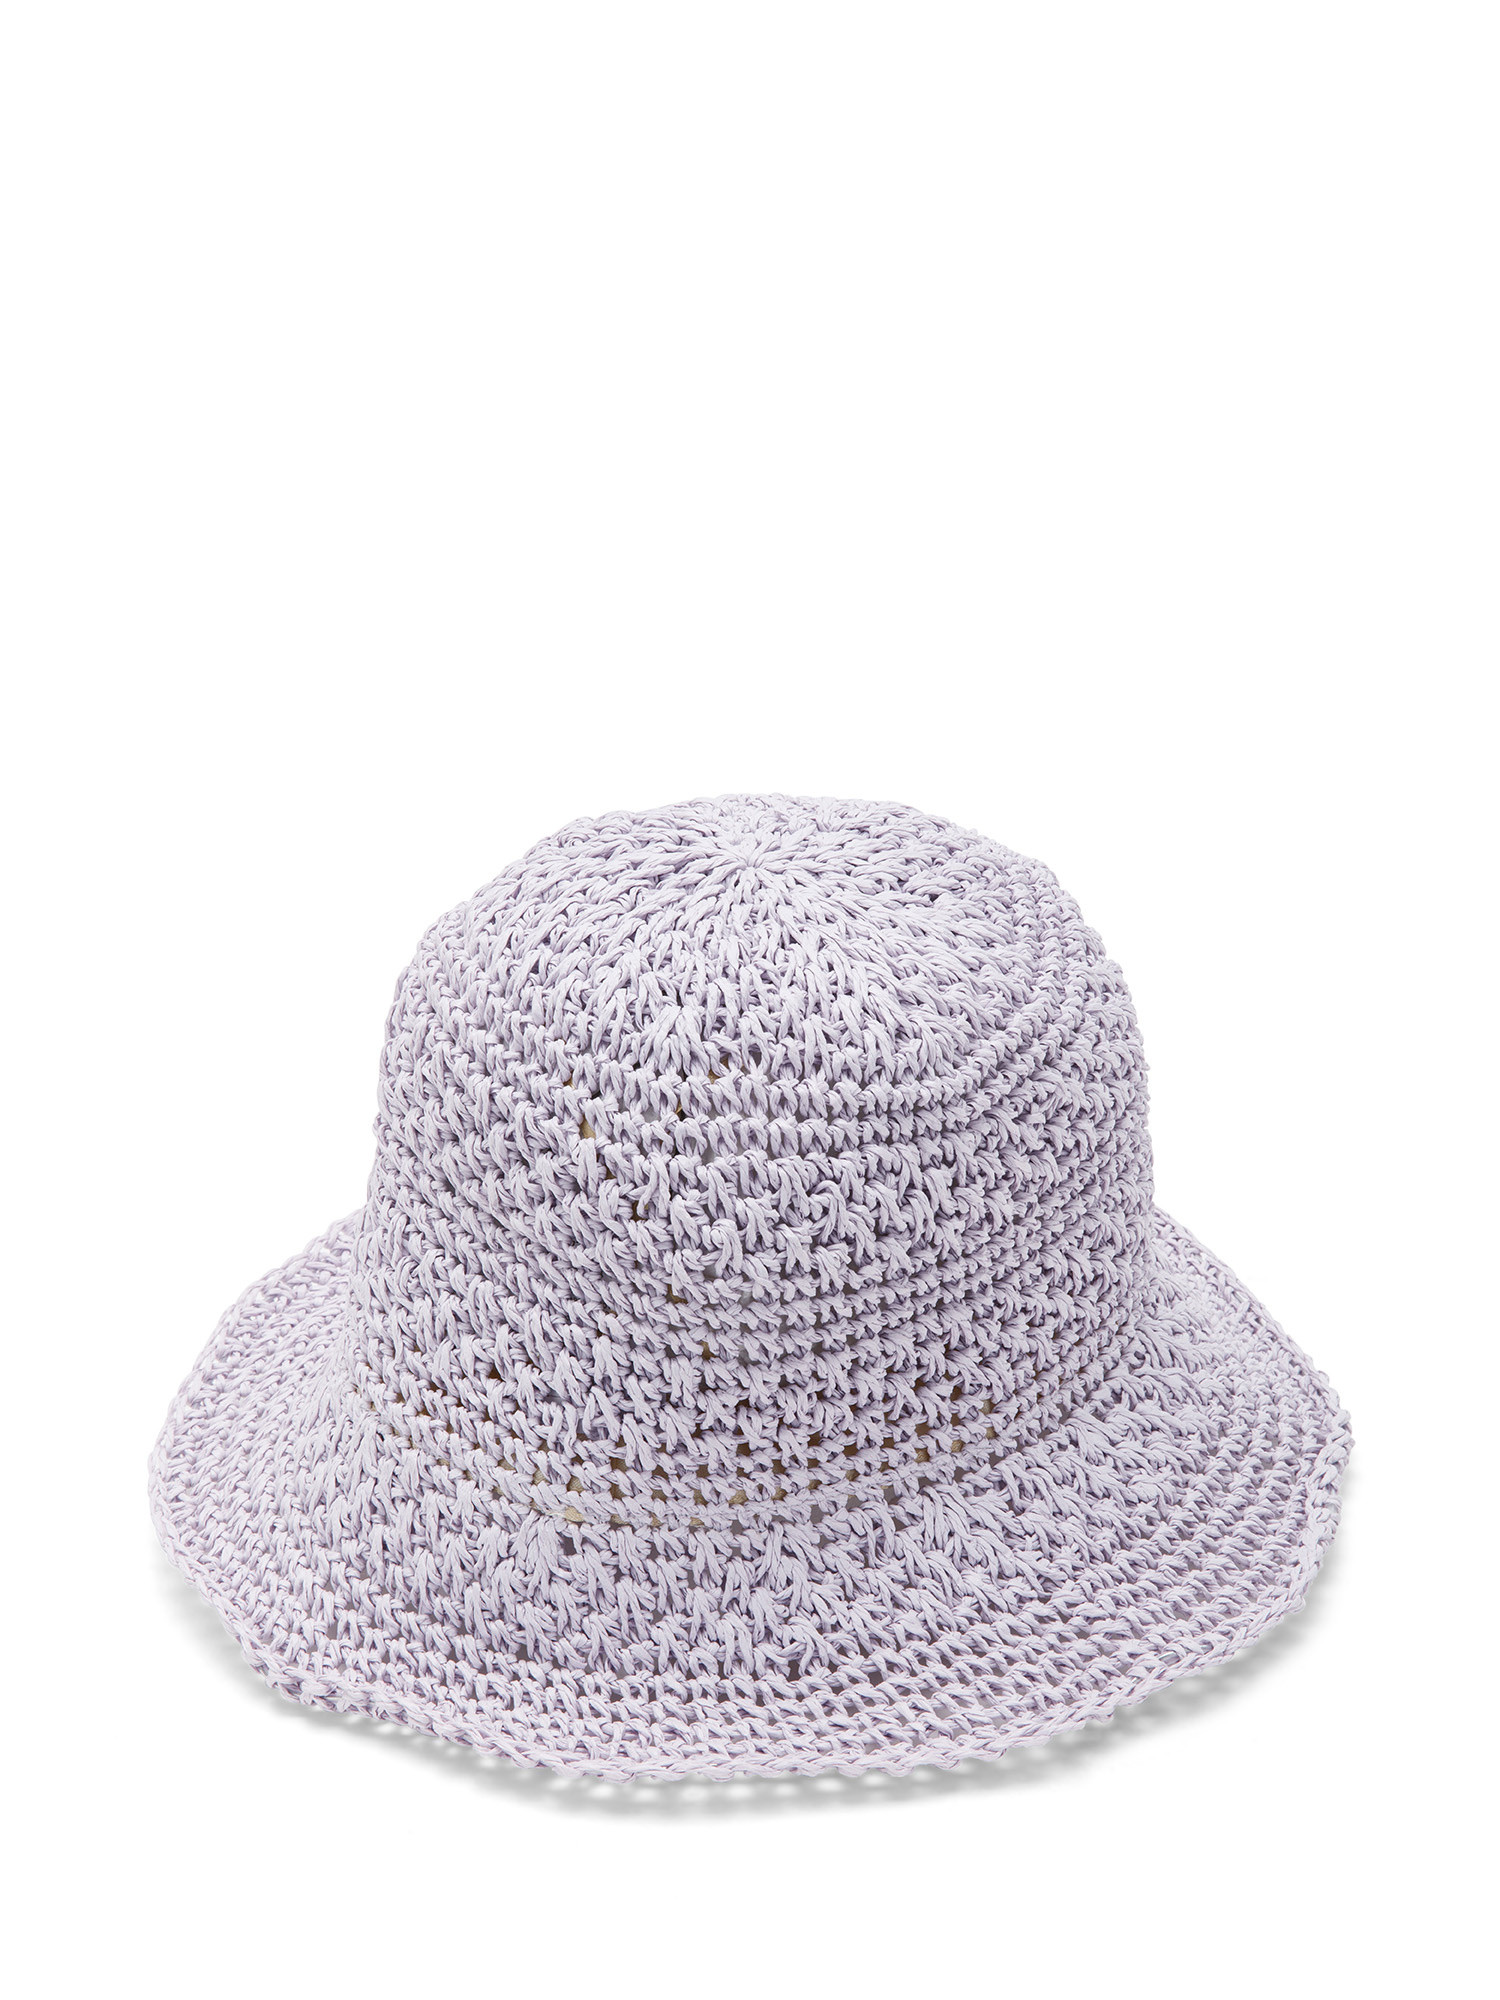 Koan - Cappello crochet, Viola lilla, large image number 0